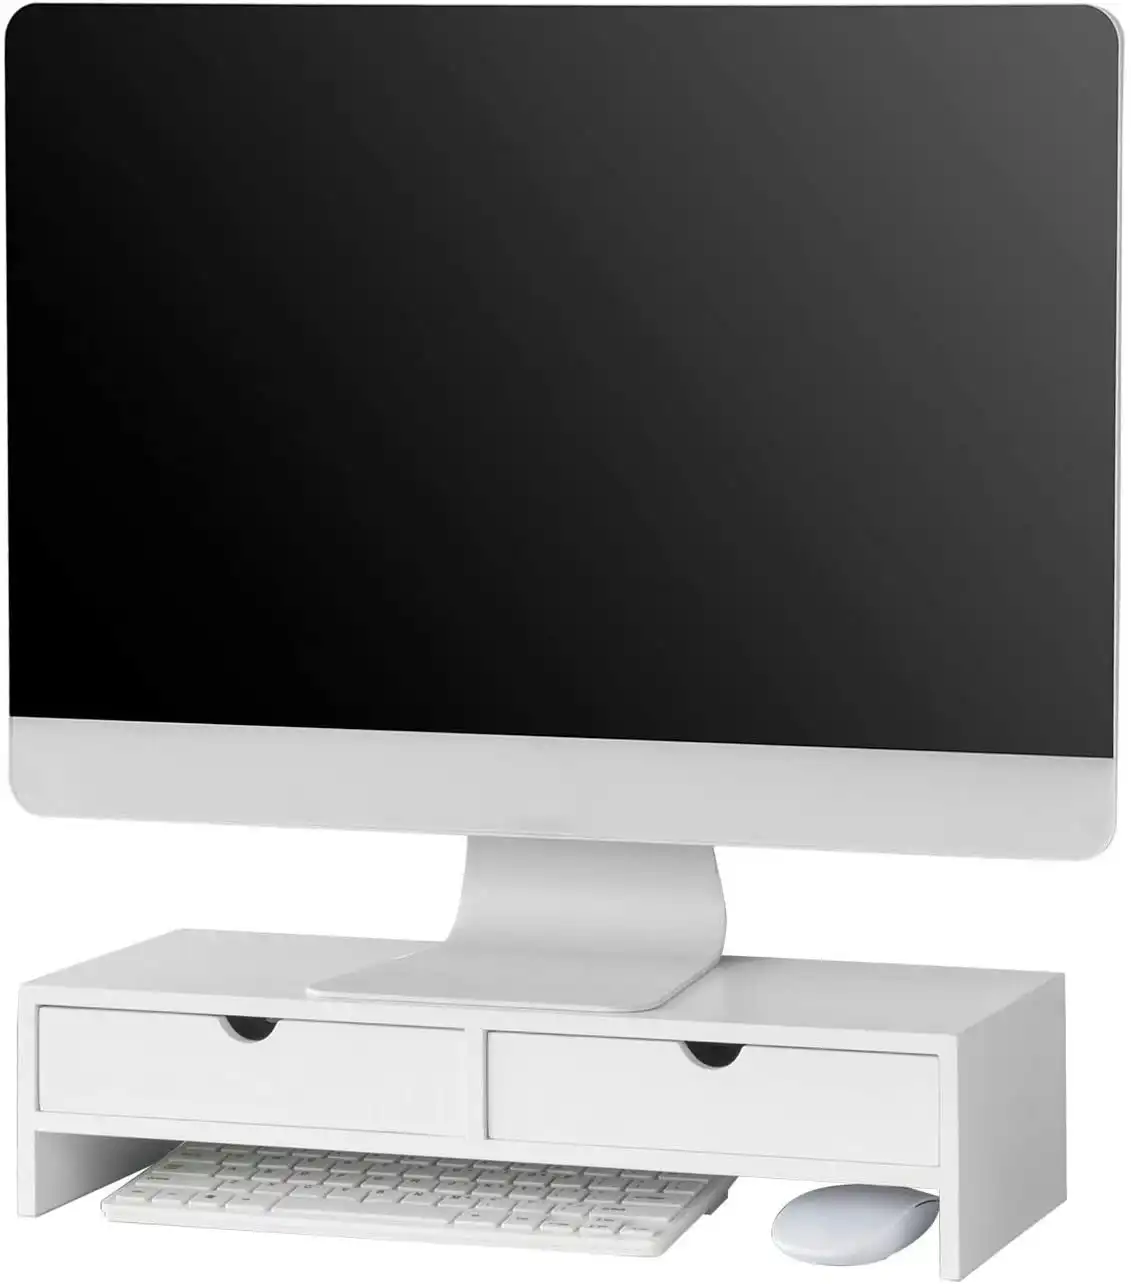 VIKUS White Monitor Stand Desk Organizer with 2 Drawers